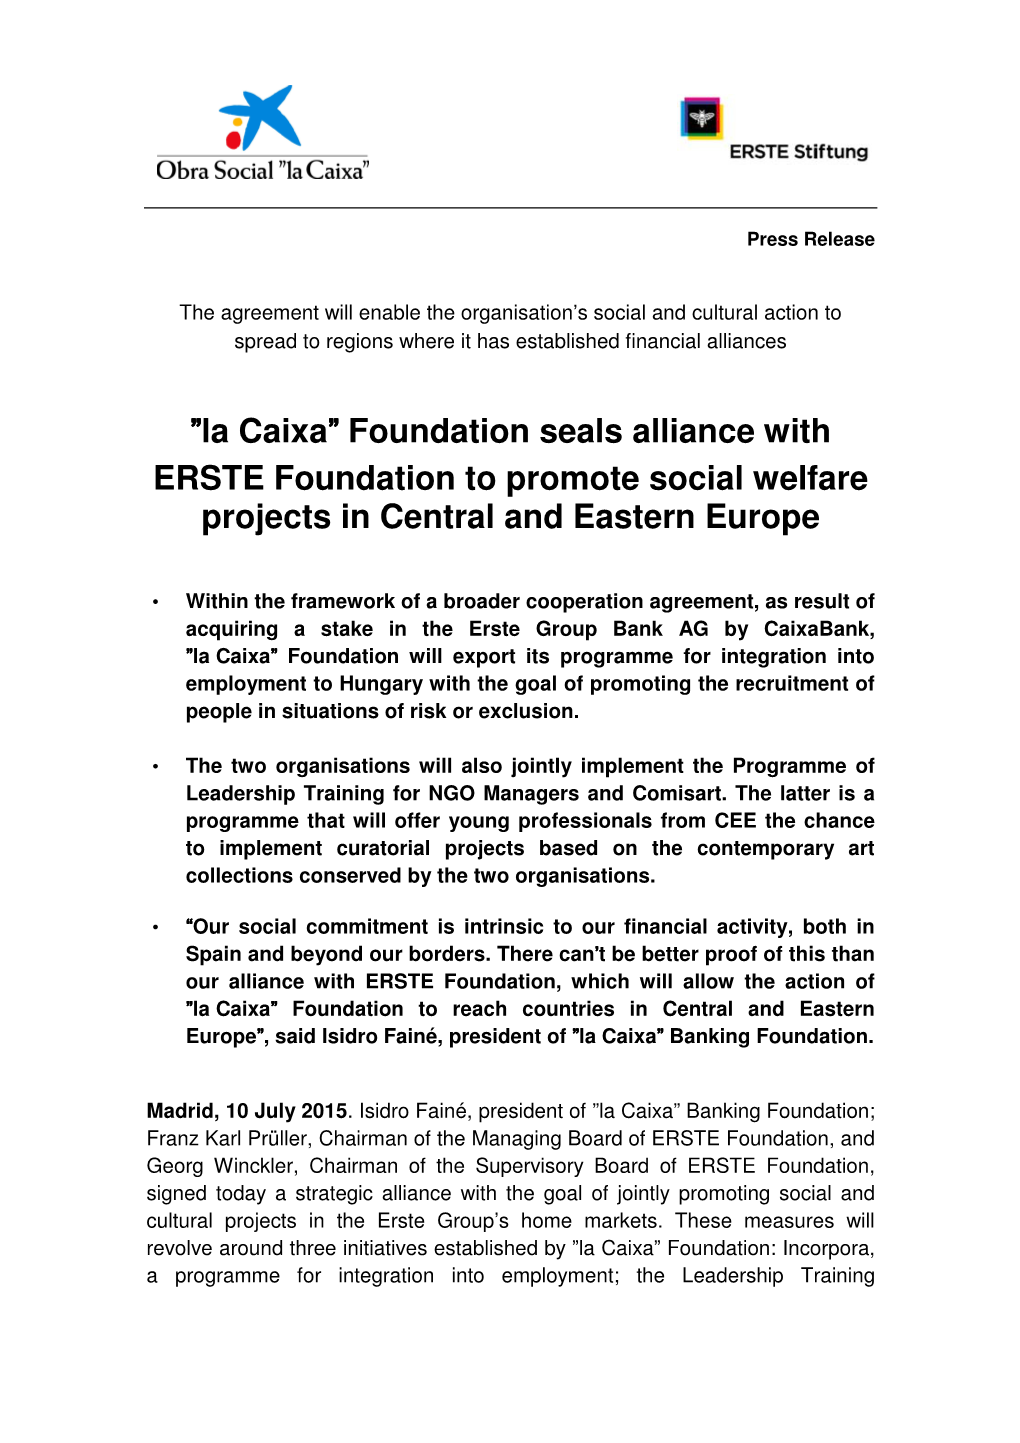 La Caixa” Foundation Seals Alliance with ERSTE Foundation to Promote